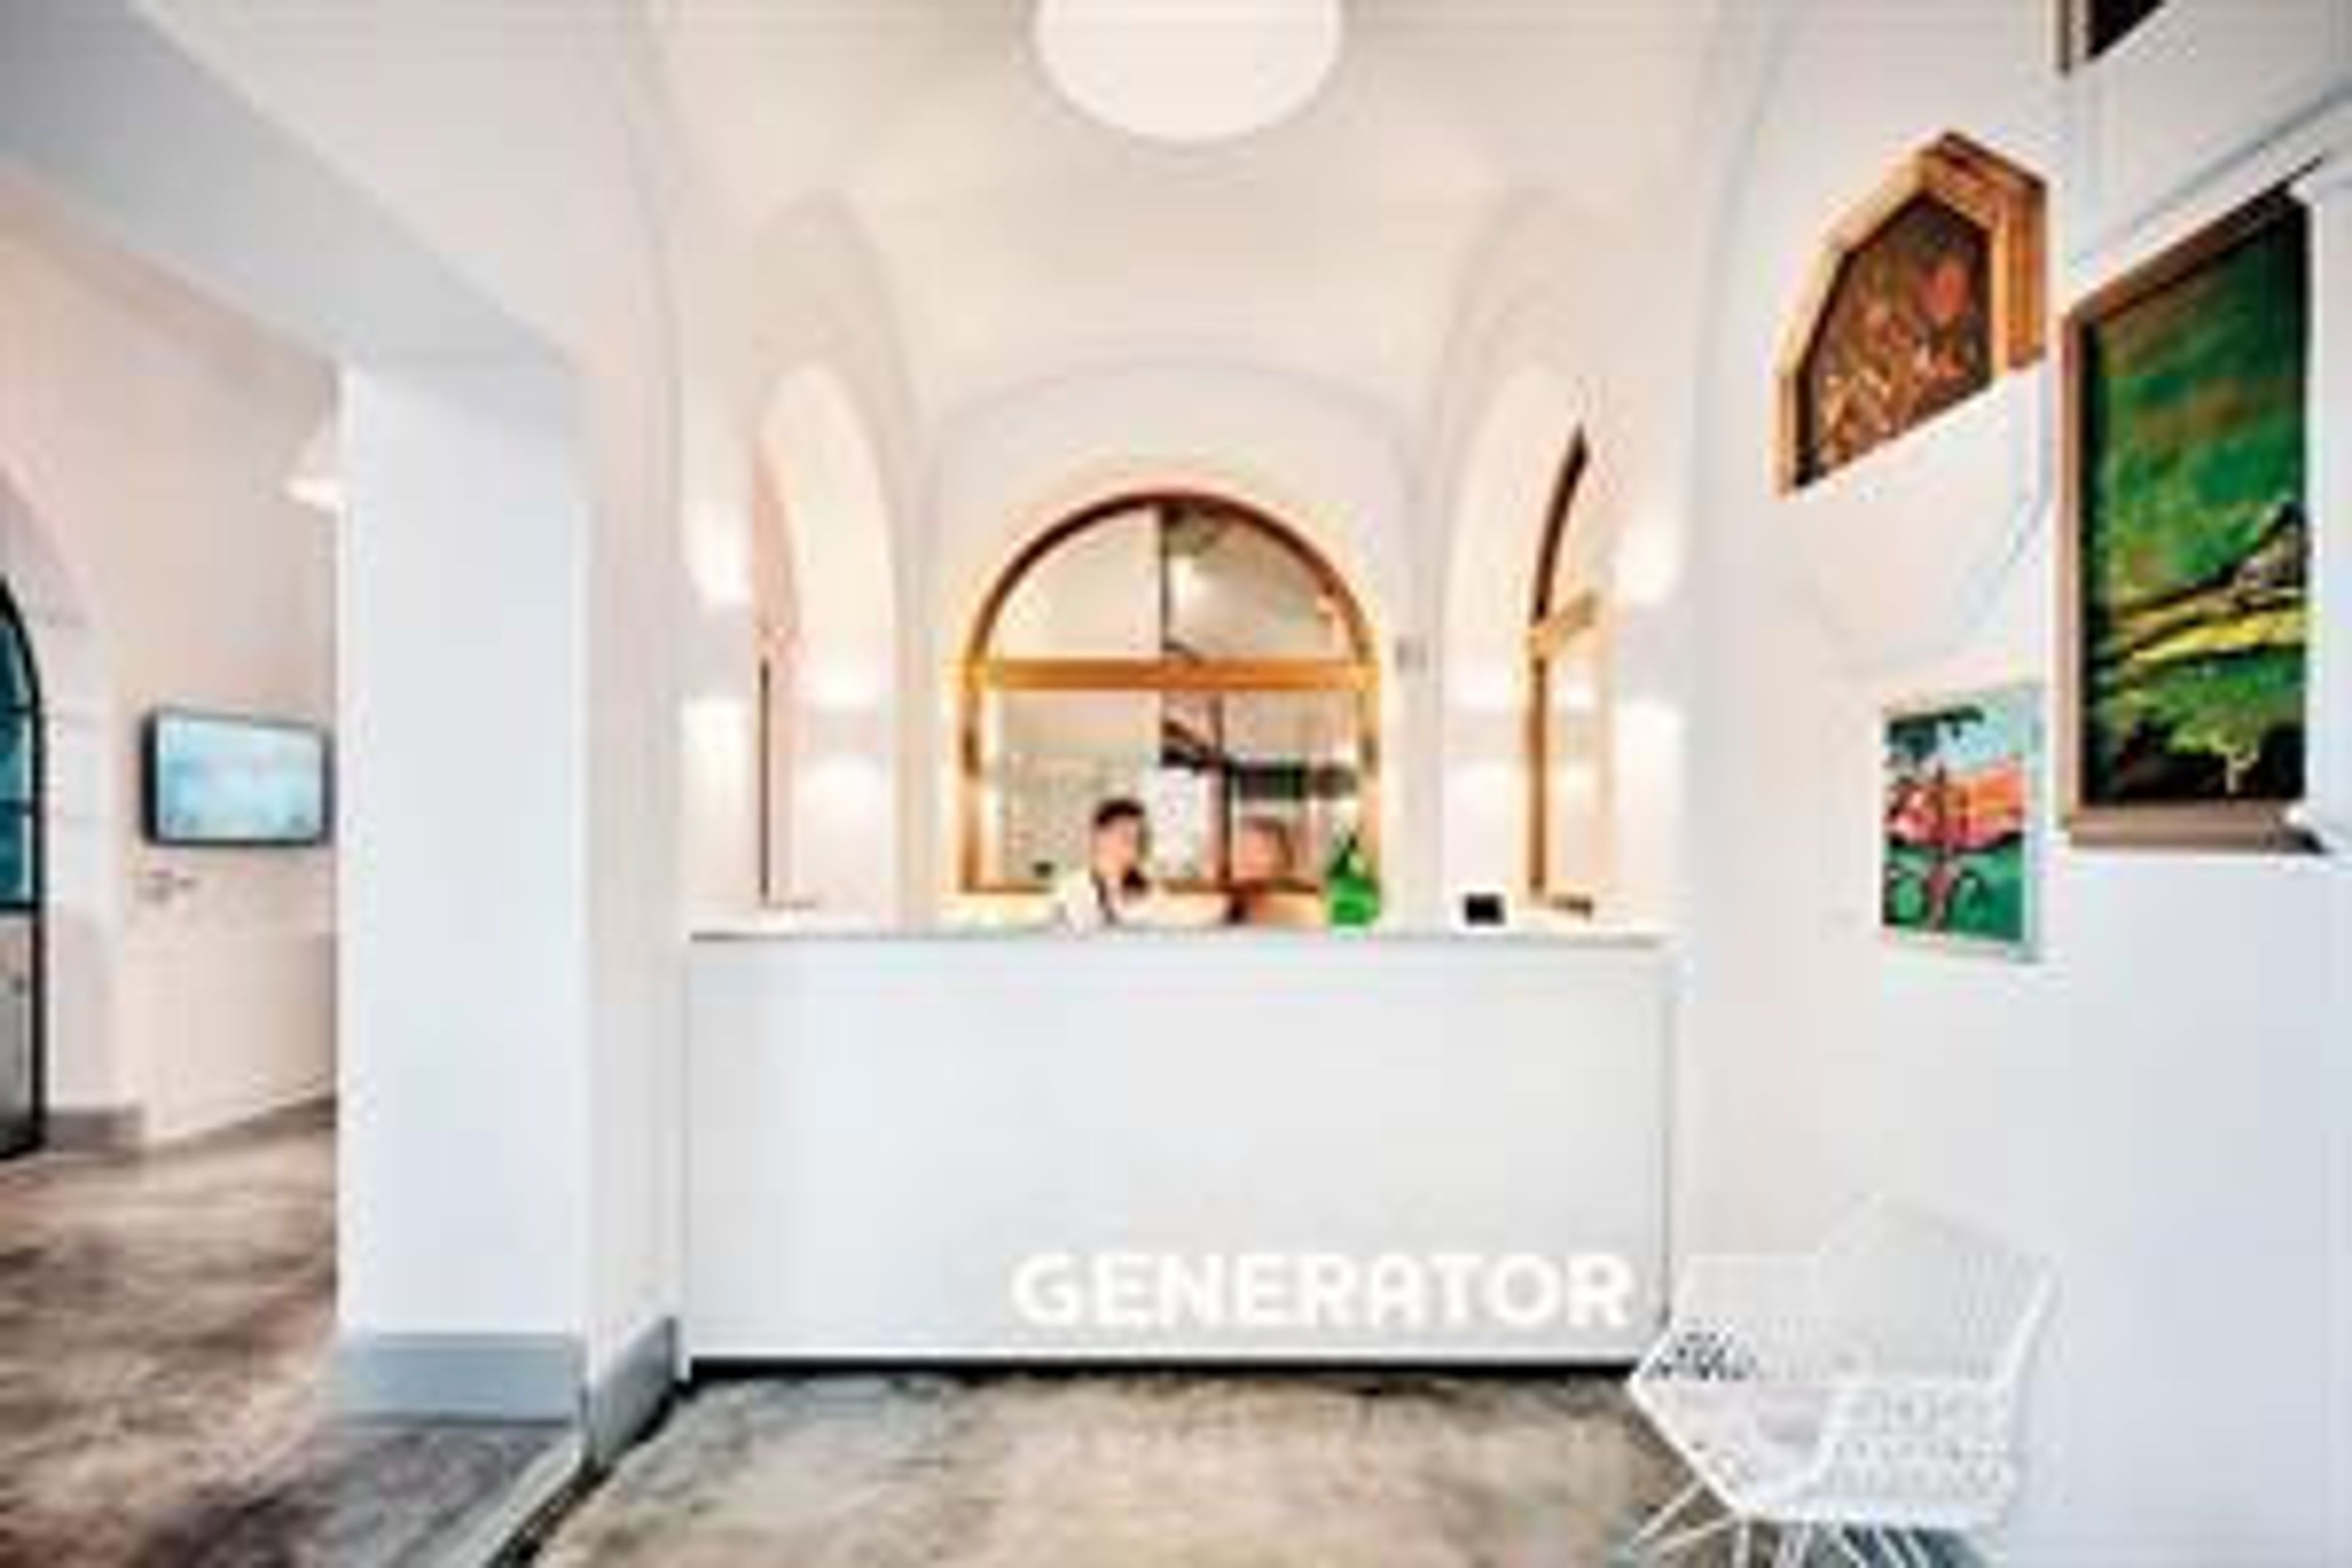 Generator Rome